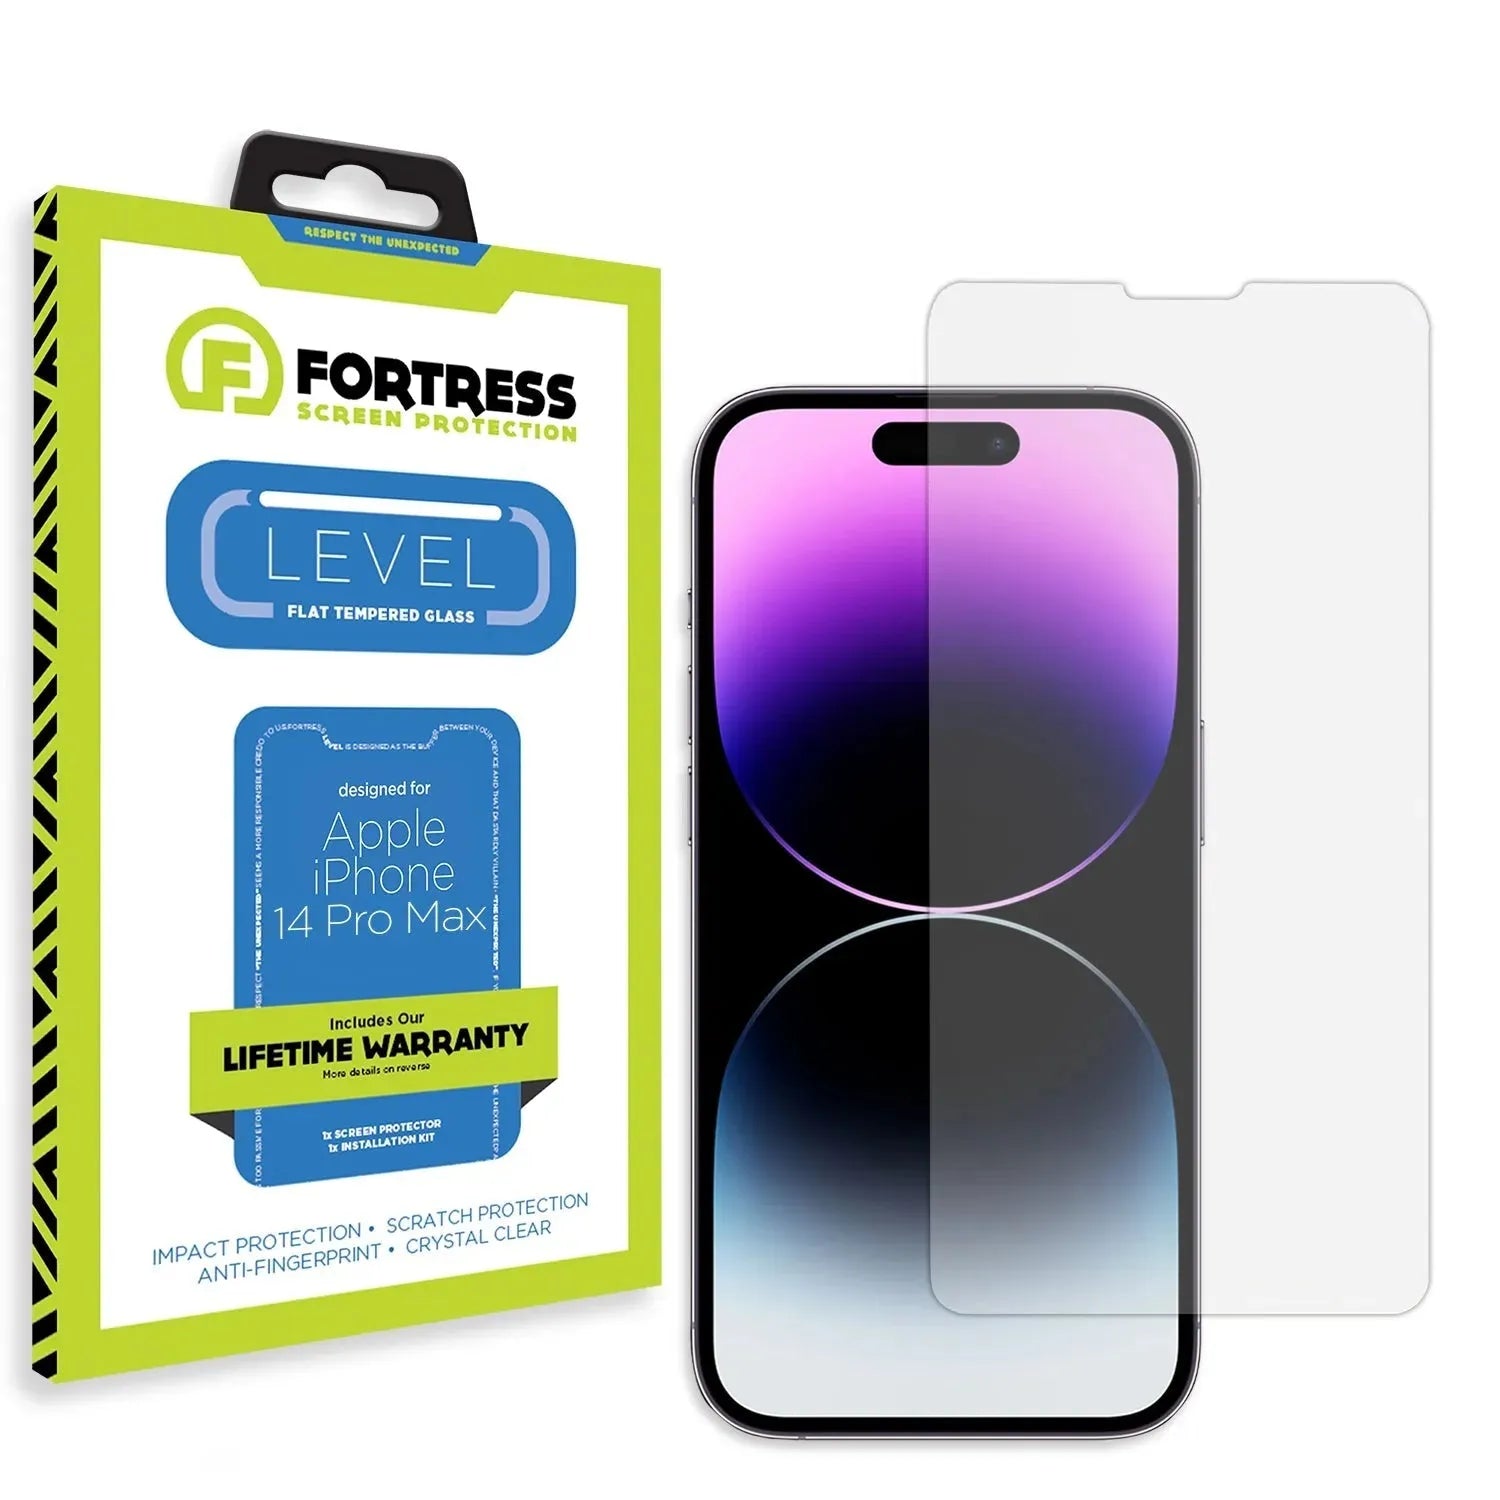 Fortress Fortress Warranty Replacement Program AppleiPhone14ProMaxScreenProtector Warranty 8.99